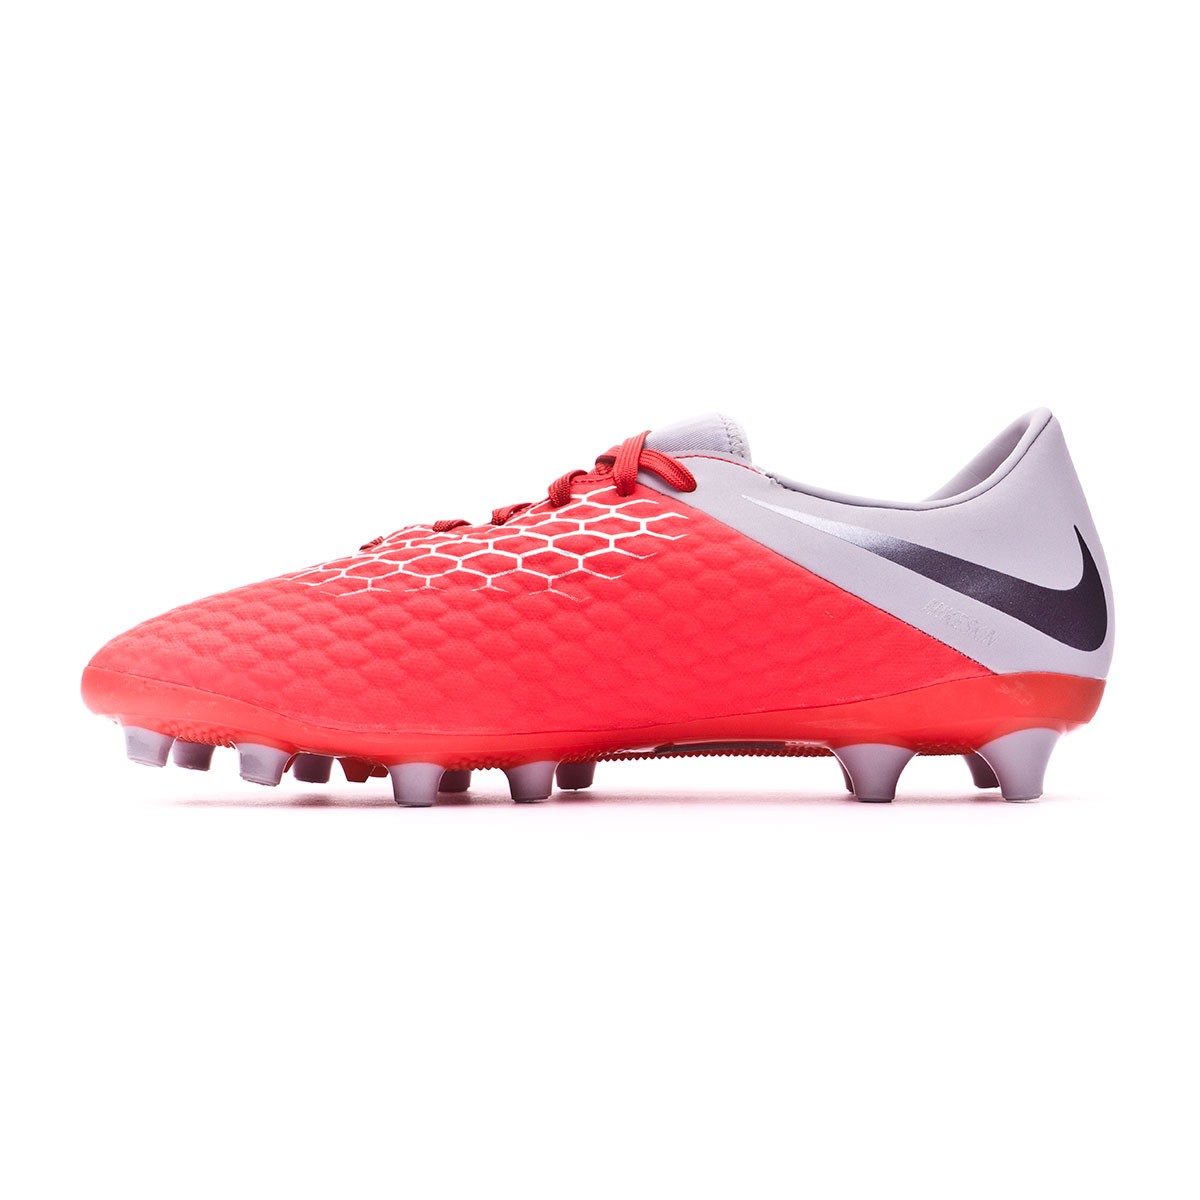 Football Boots Nike Hypervenom Phantom III Academy AG-Pro Light  crimson-Metallic dark grey-Wolf grey - Football store Fútbol Emotion